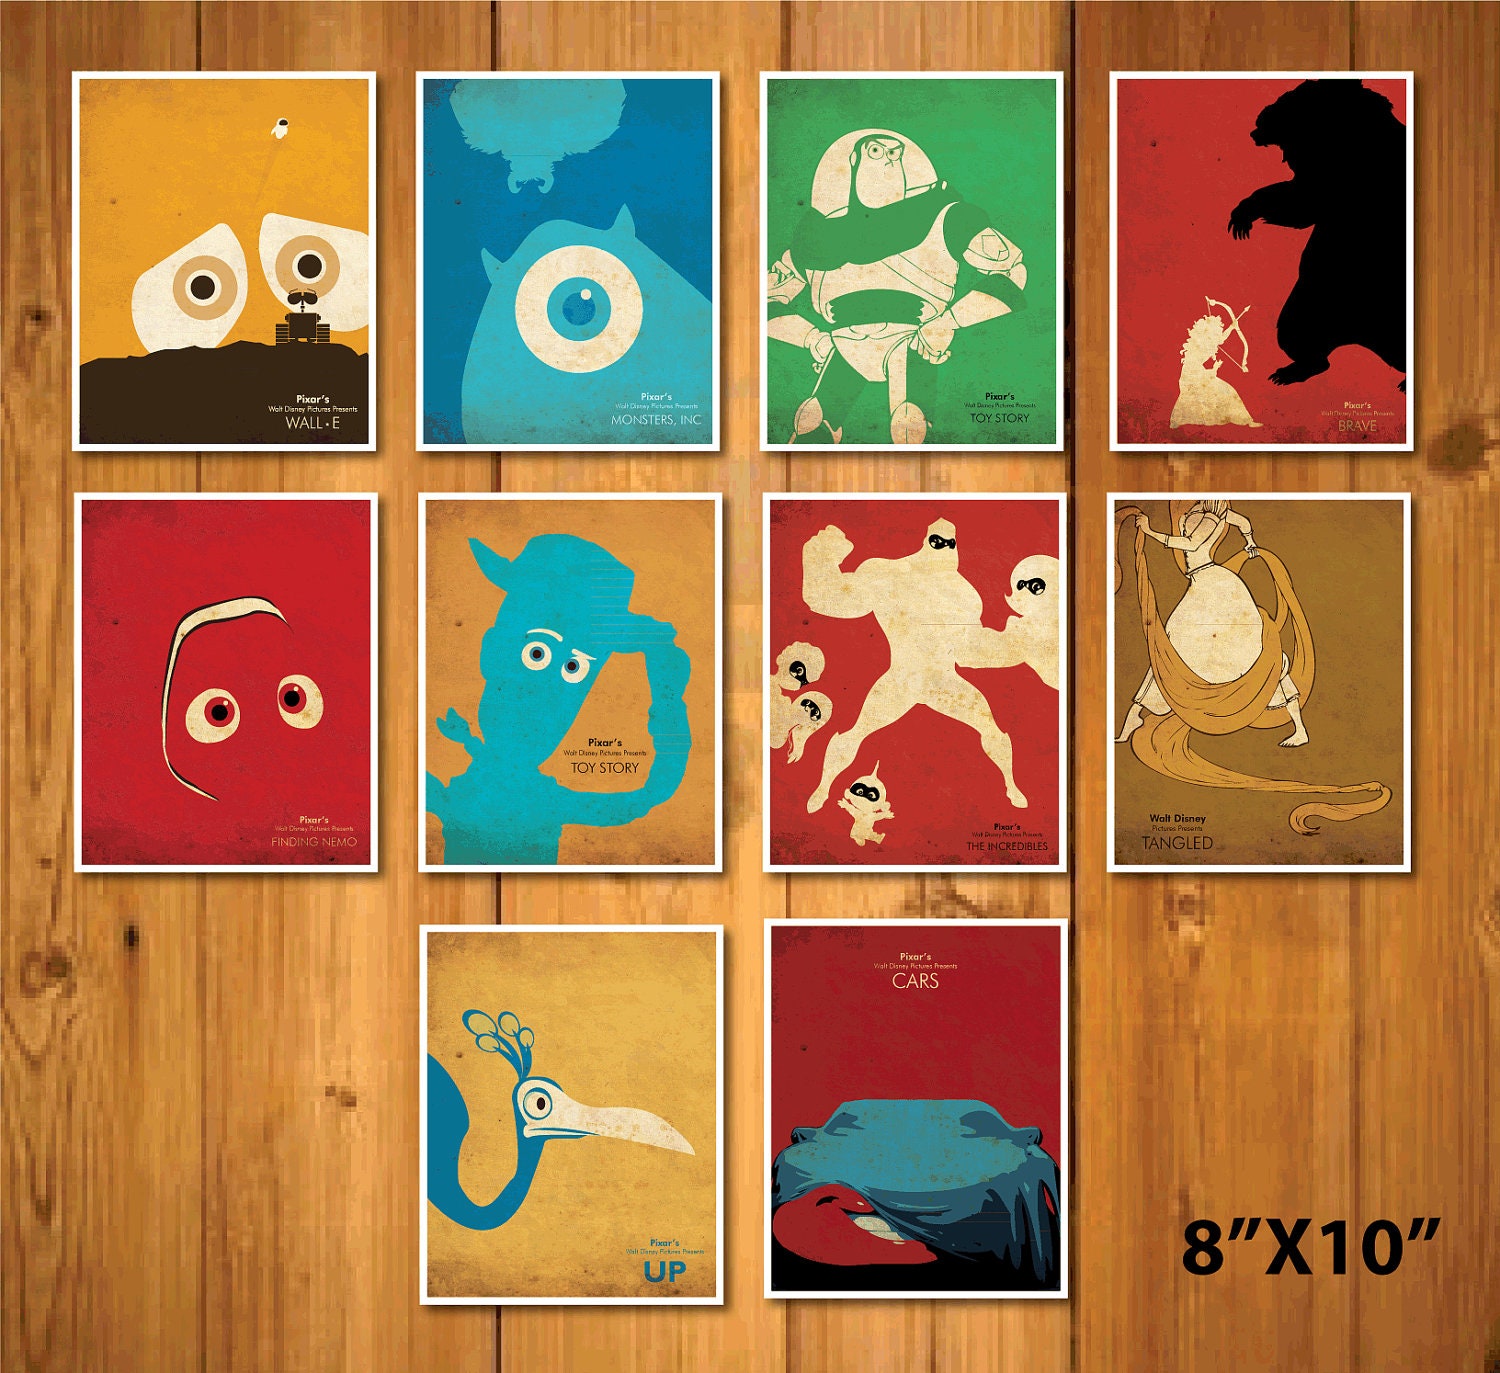 Promotion-  8 X 10" Walt Disney and Pixar posters set